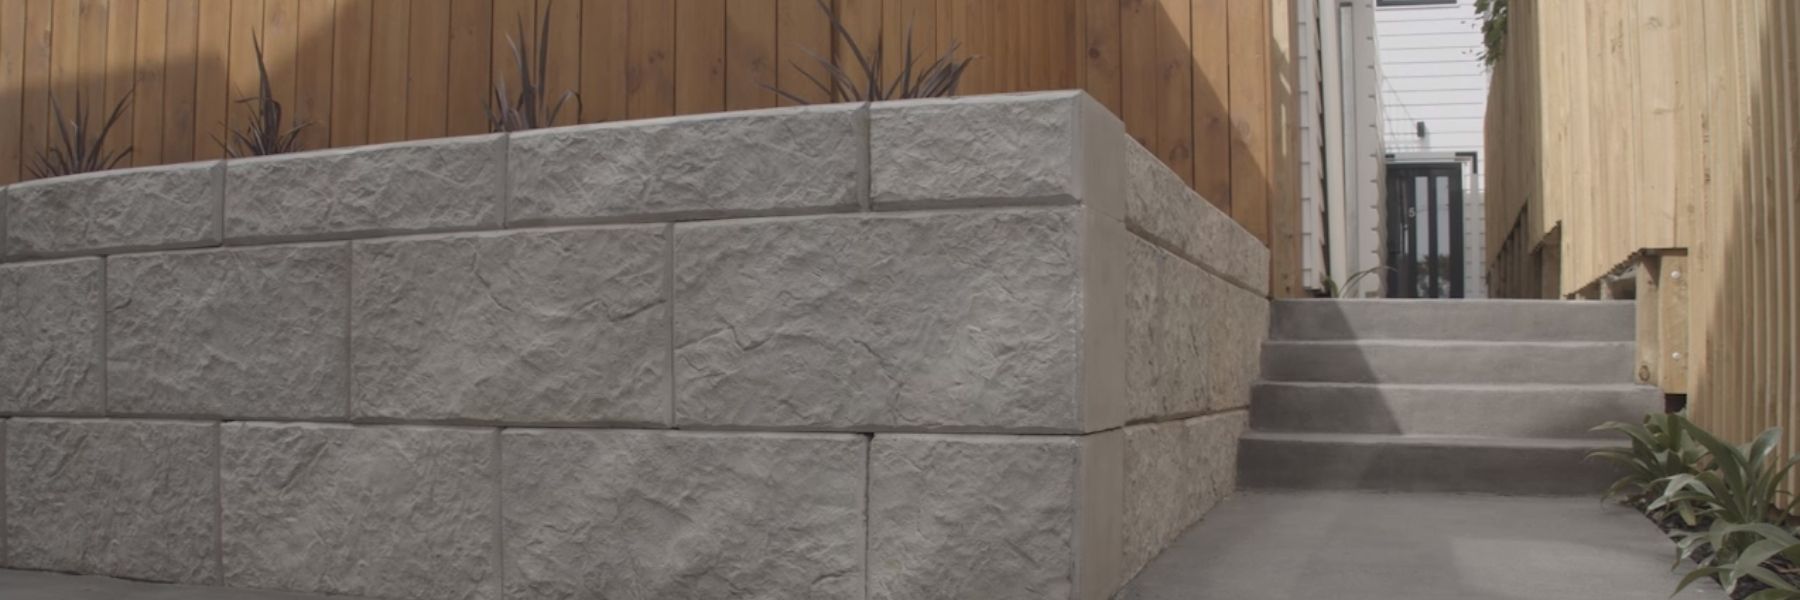 Stonebloc Retaining Walls for High Density Housing